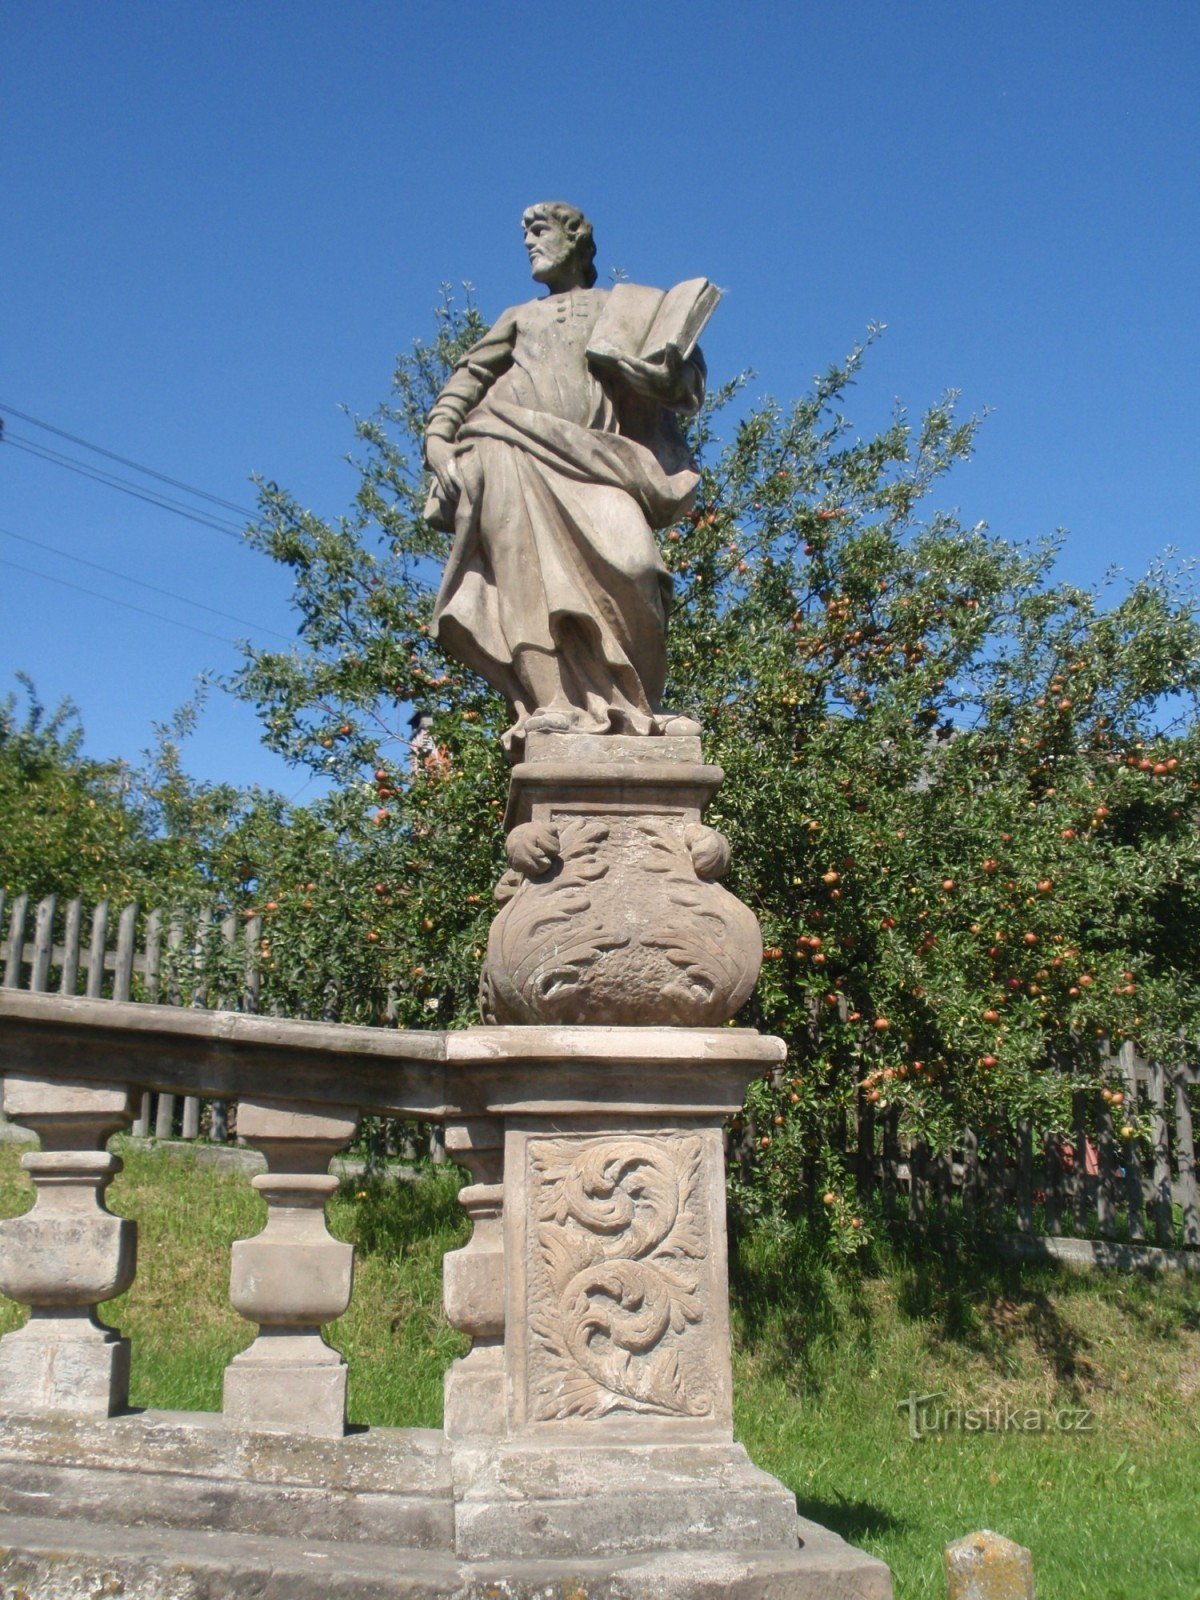 Galerija skulptura u Kunčinu